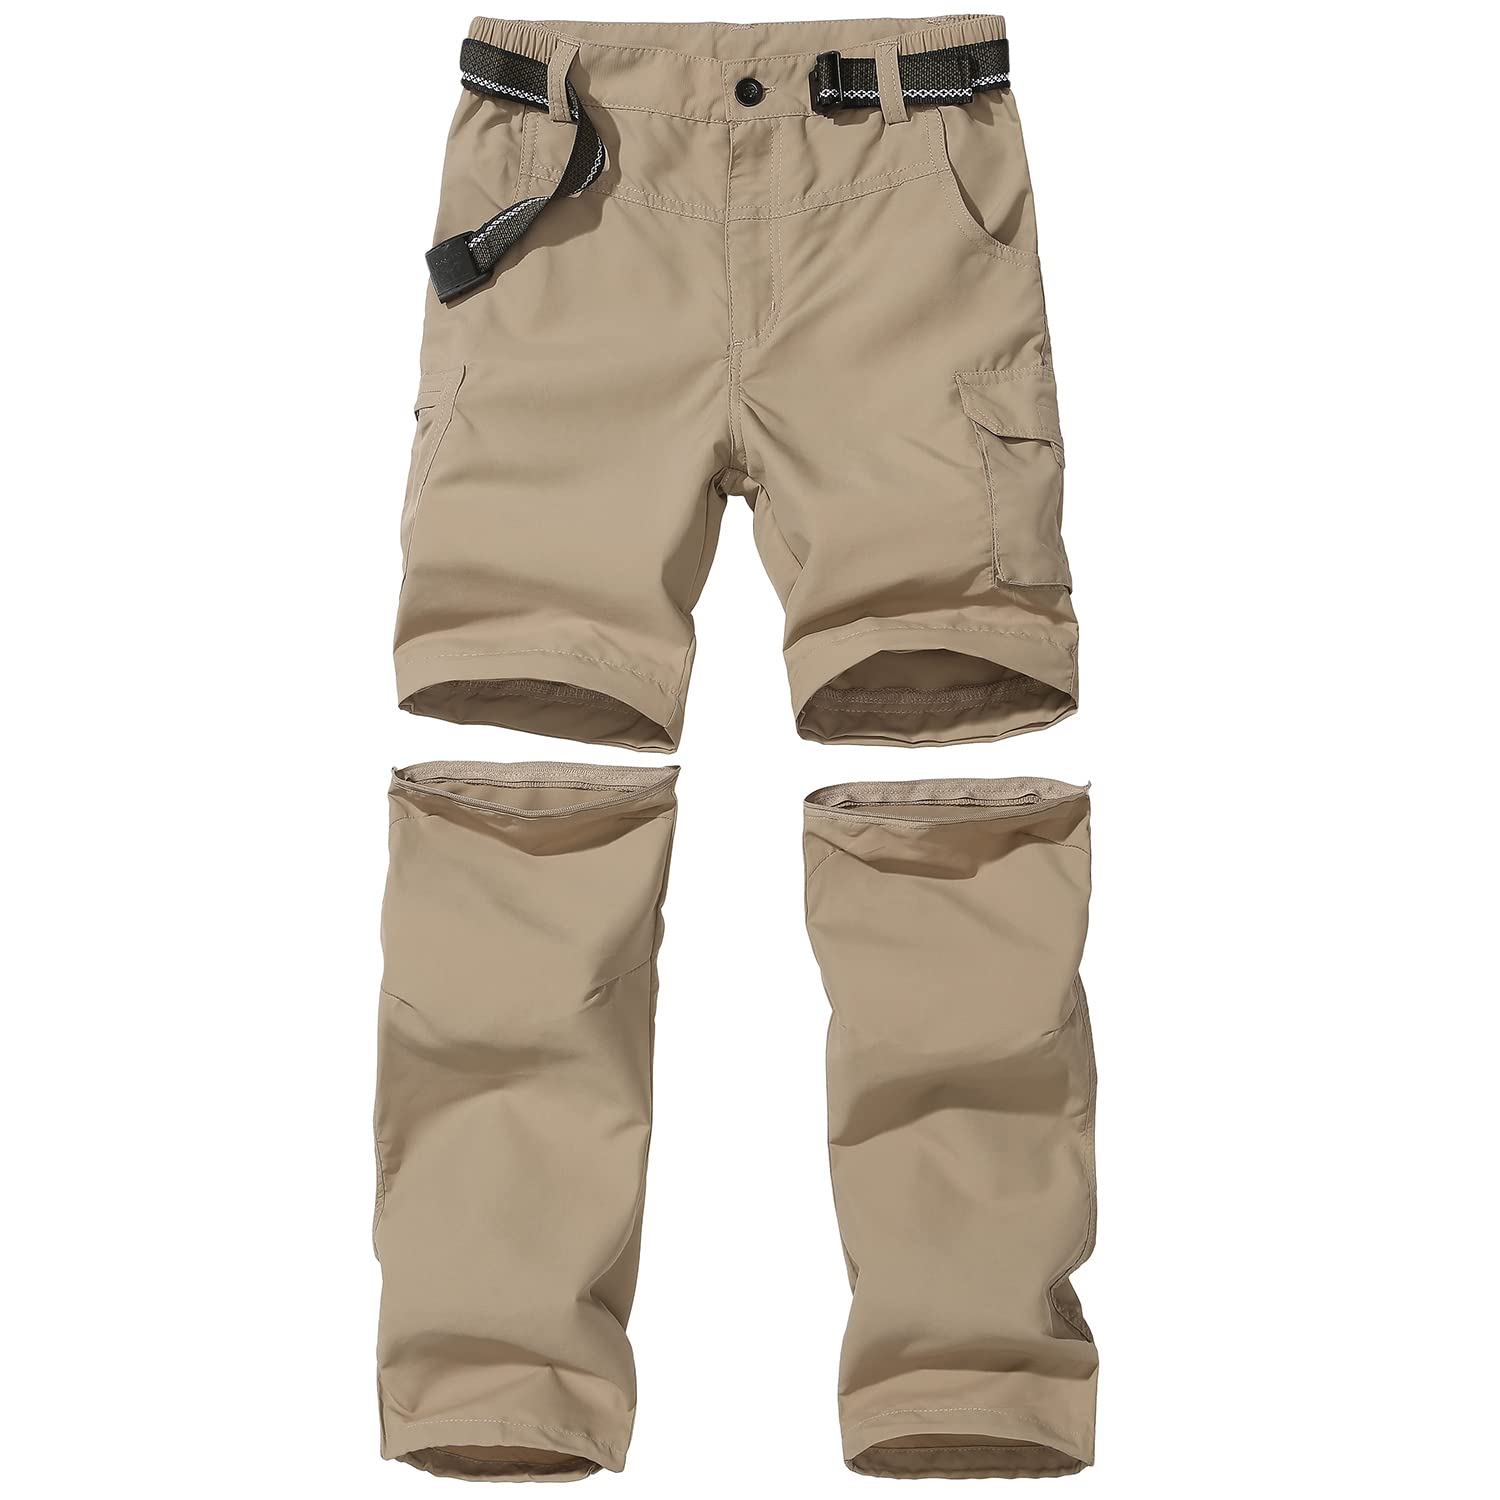 Jomlun Boys Hiking Pants Kids Cargo Outdoor Casual Camping Pants Quick Dry Convertible Zip Off Trousers Khaki